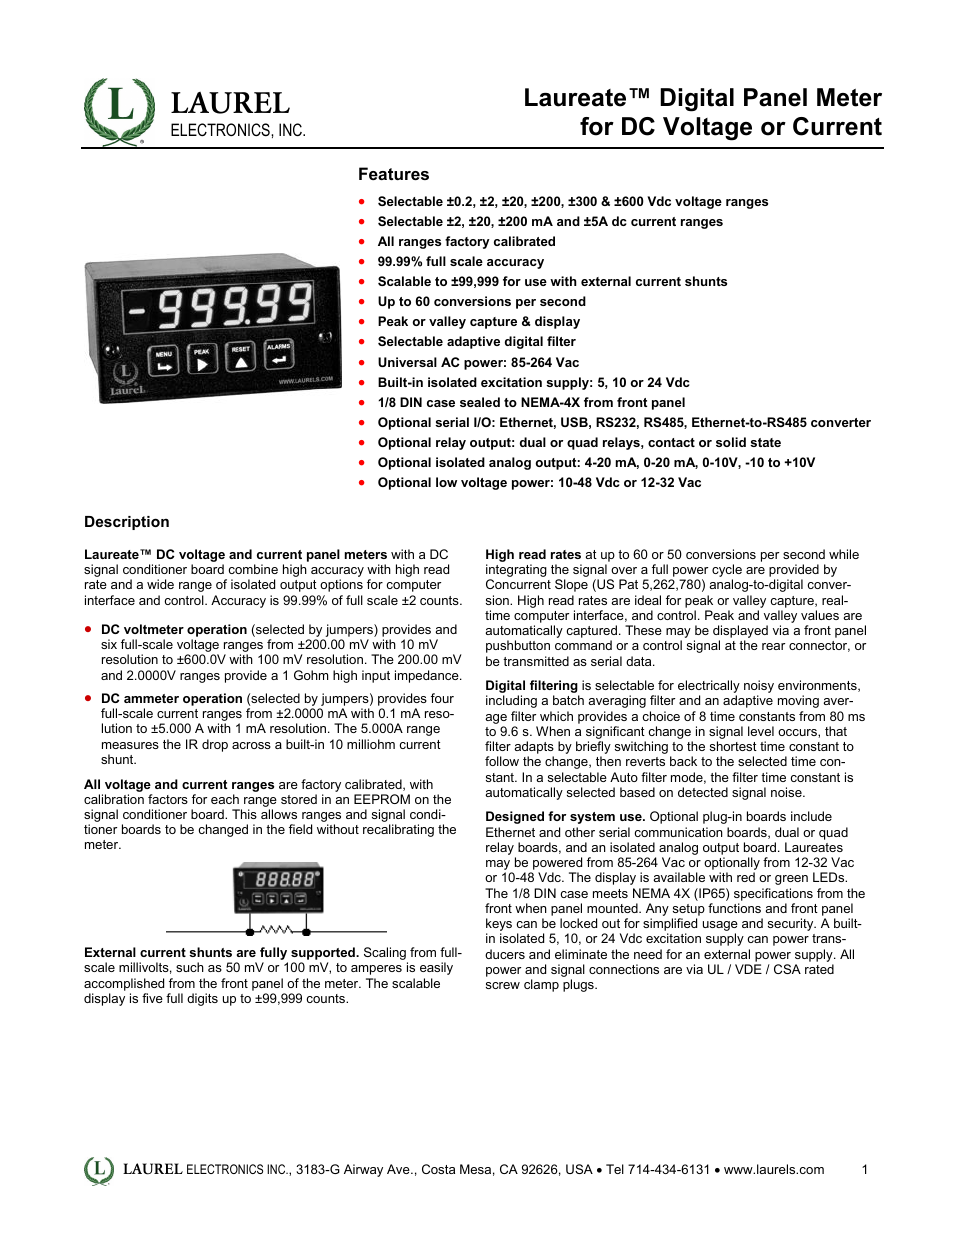 Laureate Digital Panel Meter for DC Voltage or Current